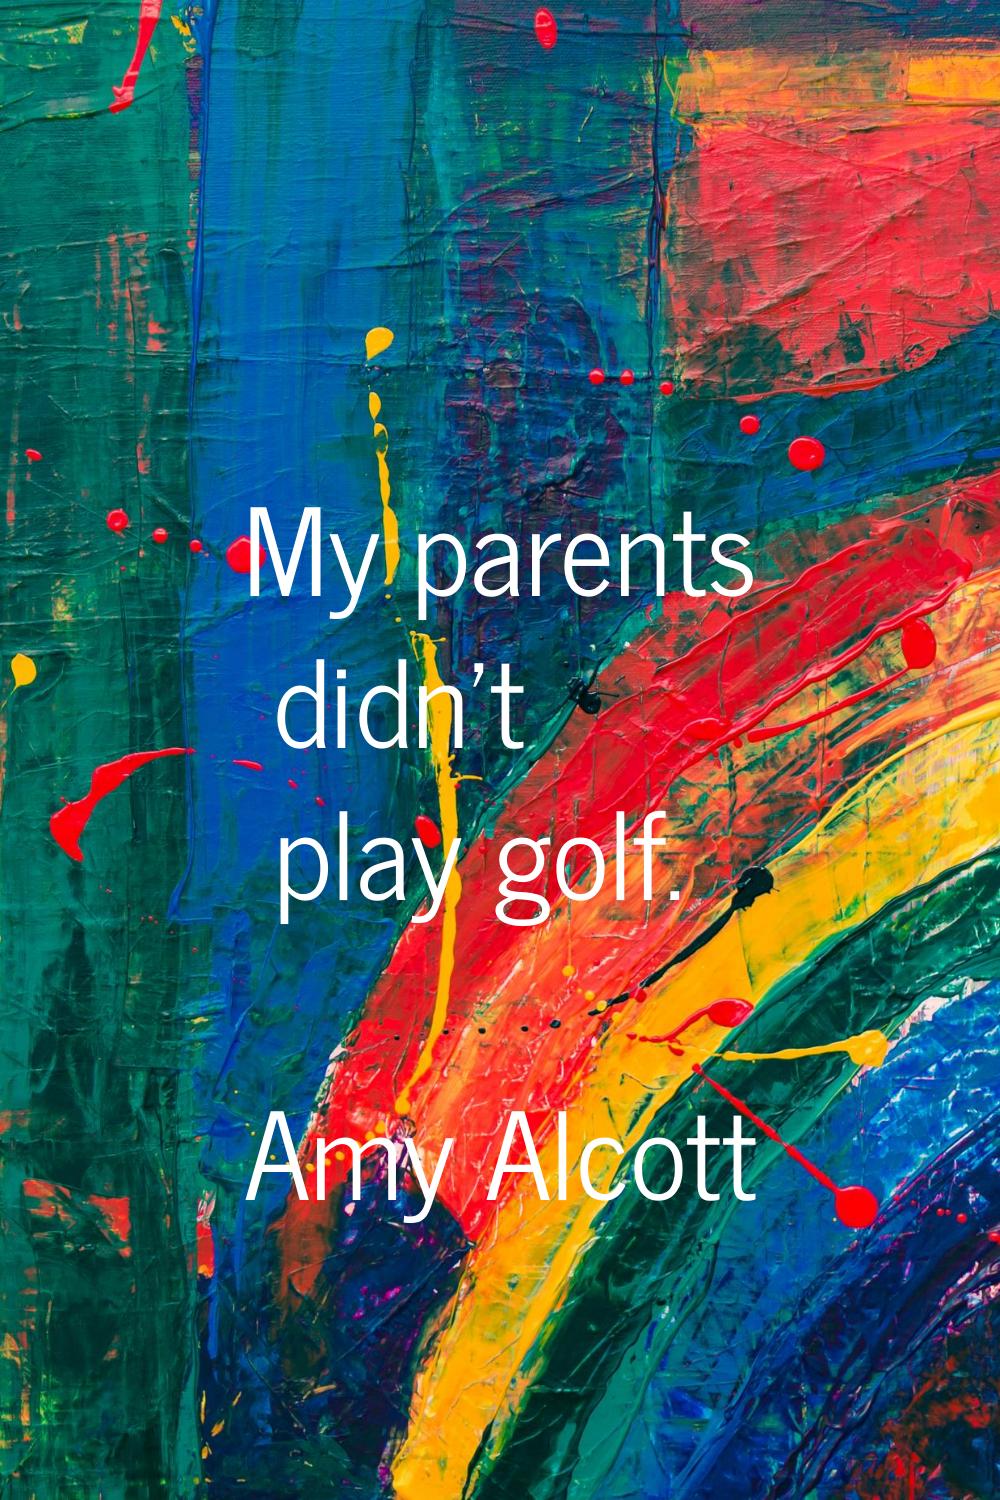 My parents didn't play golf.